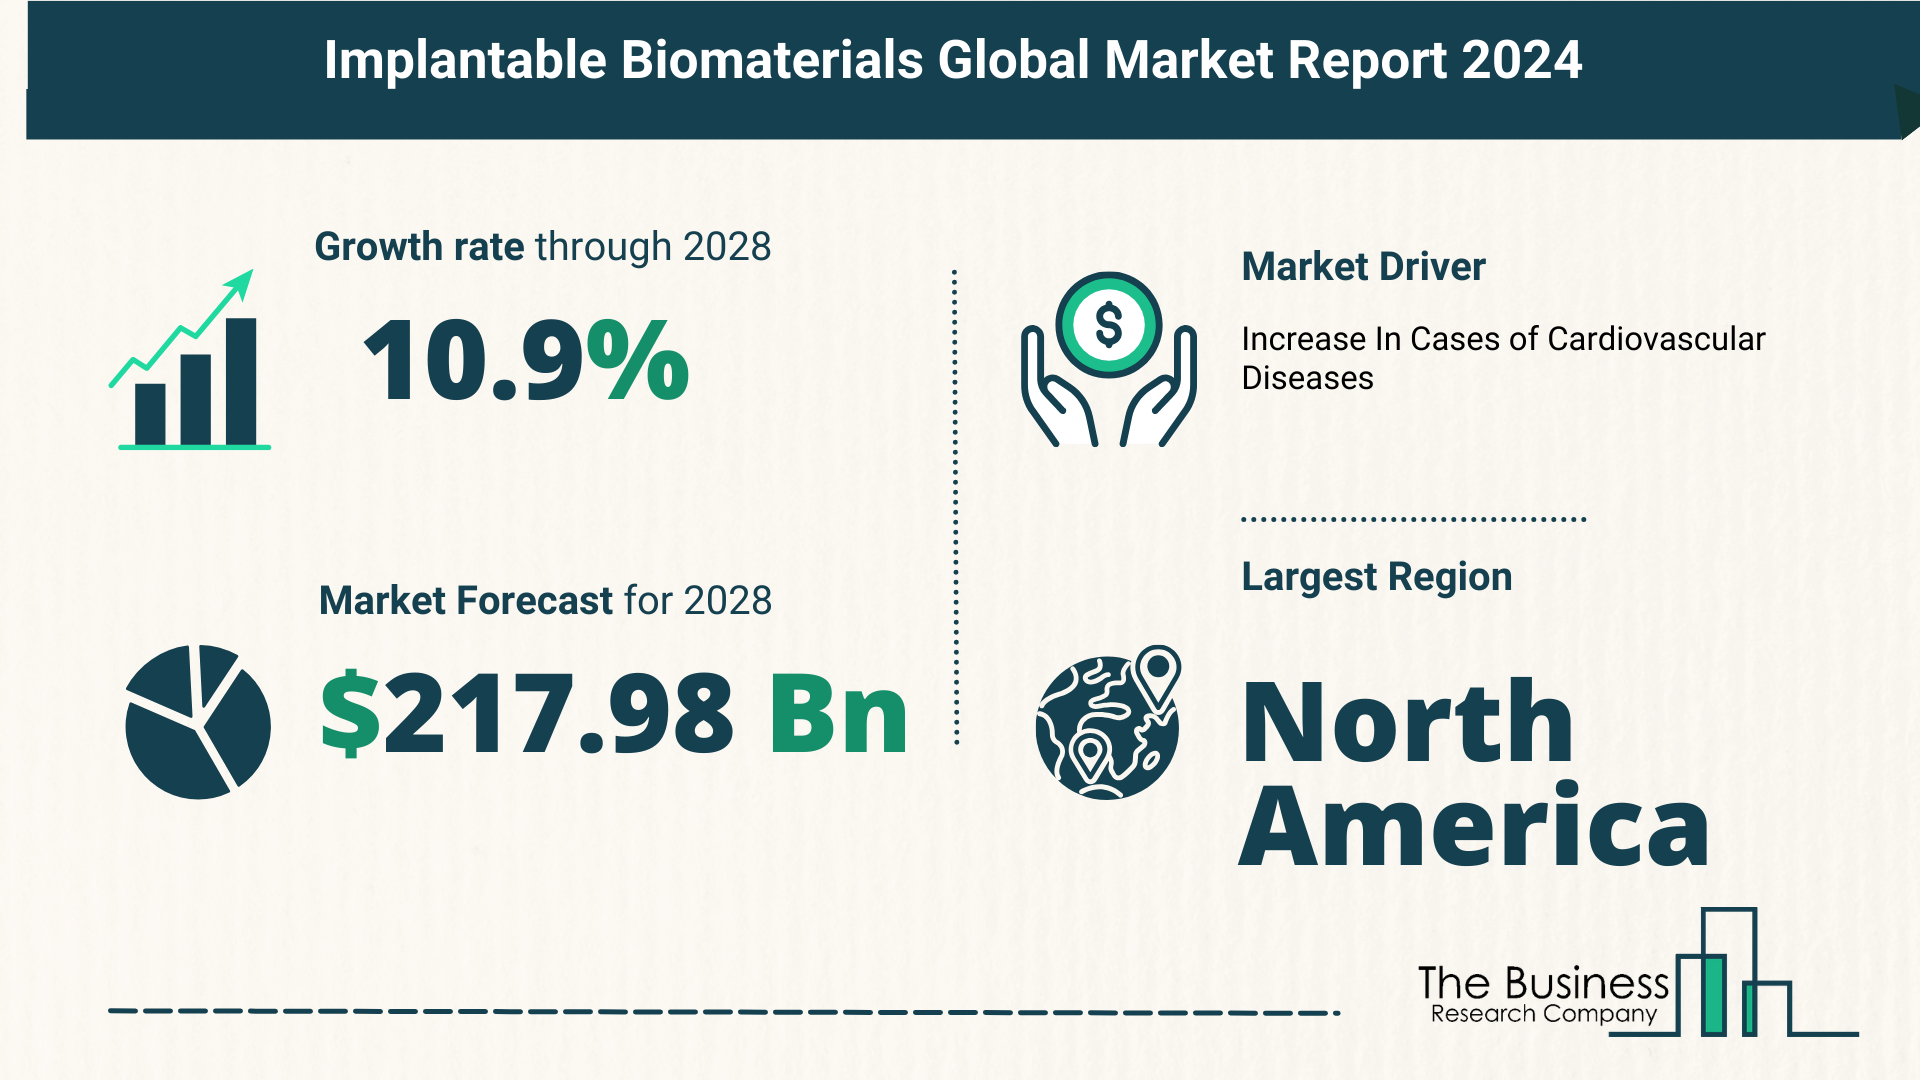 Global Implantable Biomaterials Market